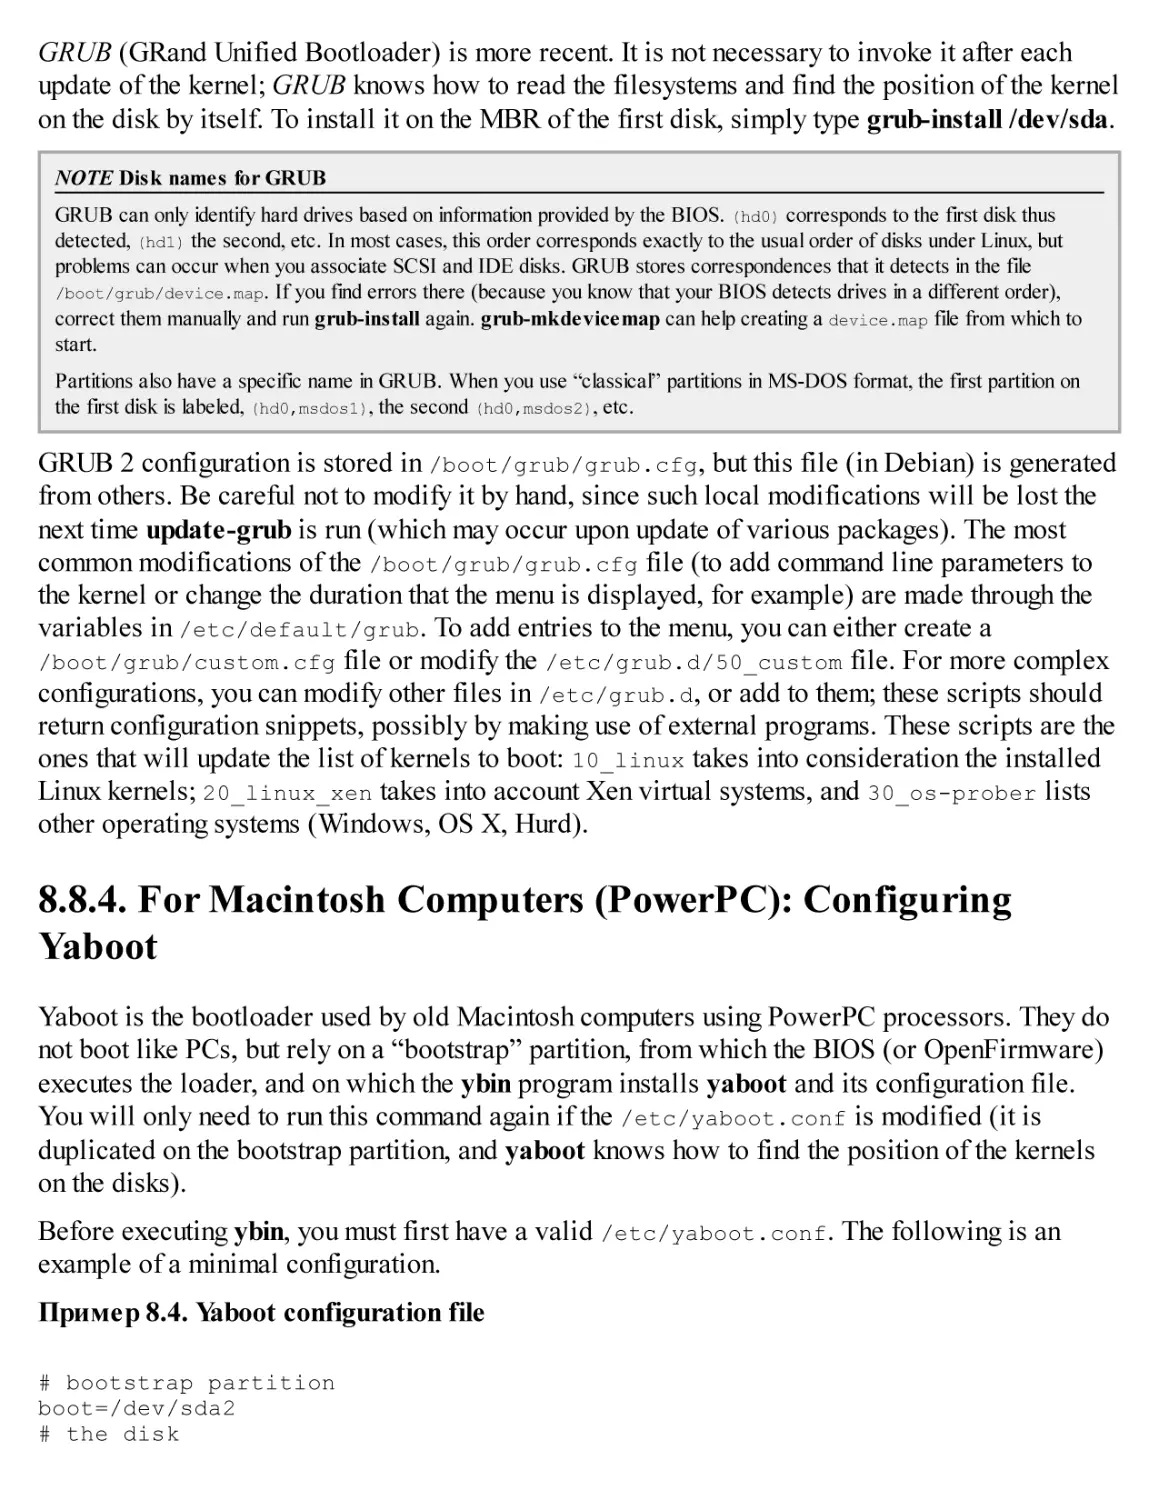 8.8.4. For Macintosh Computers (PowerPC)